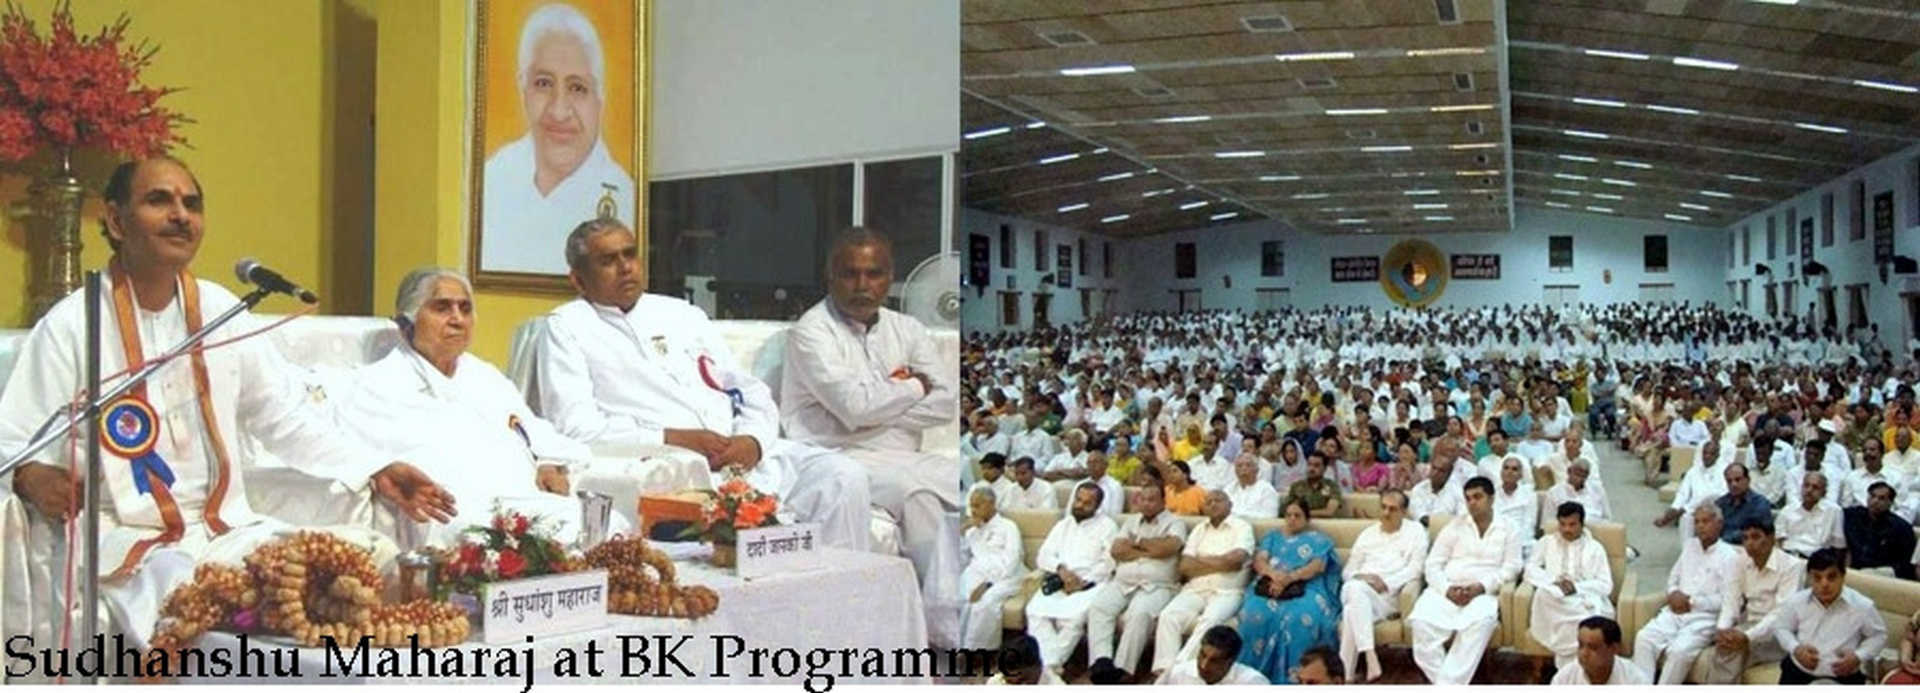 Religious leaders with brahmakumaris - 2